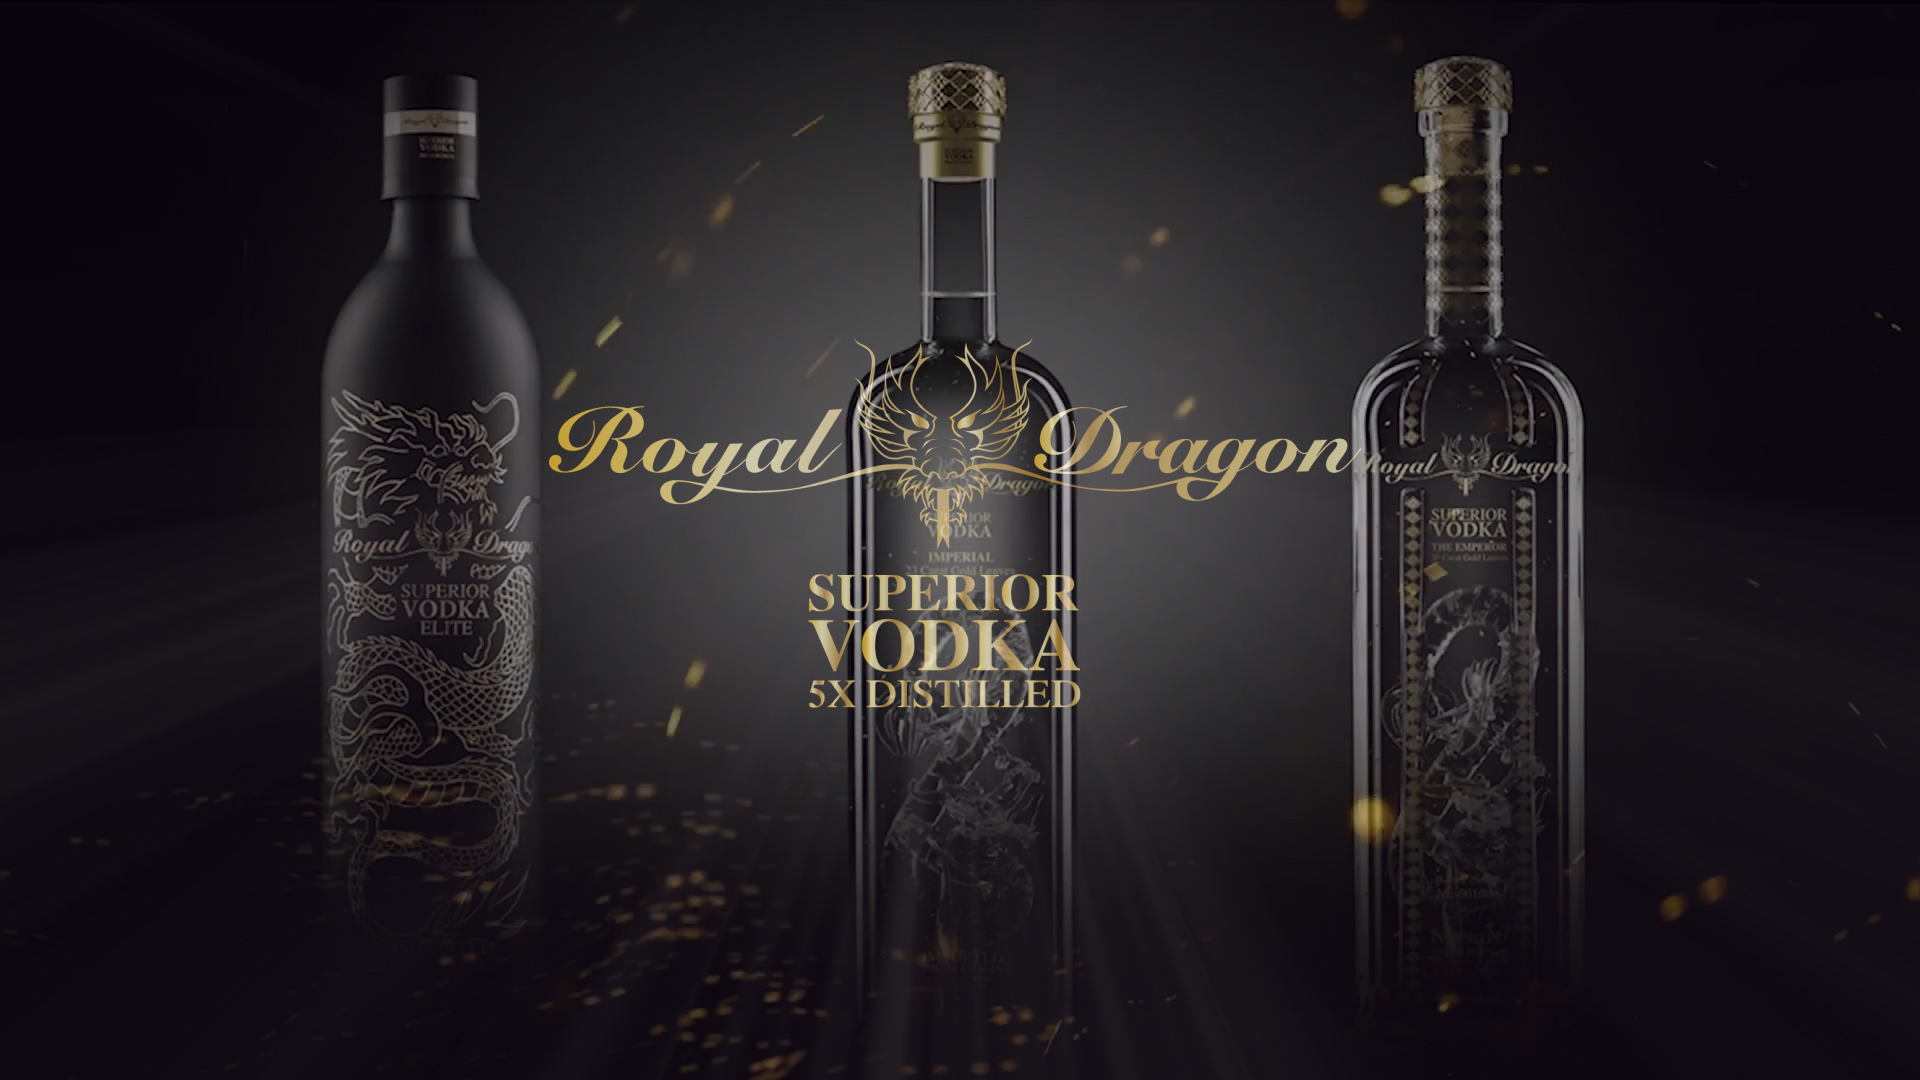 Royal Dragon Vodka TV advert